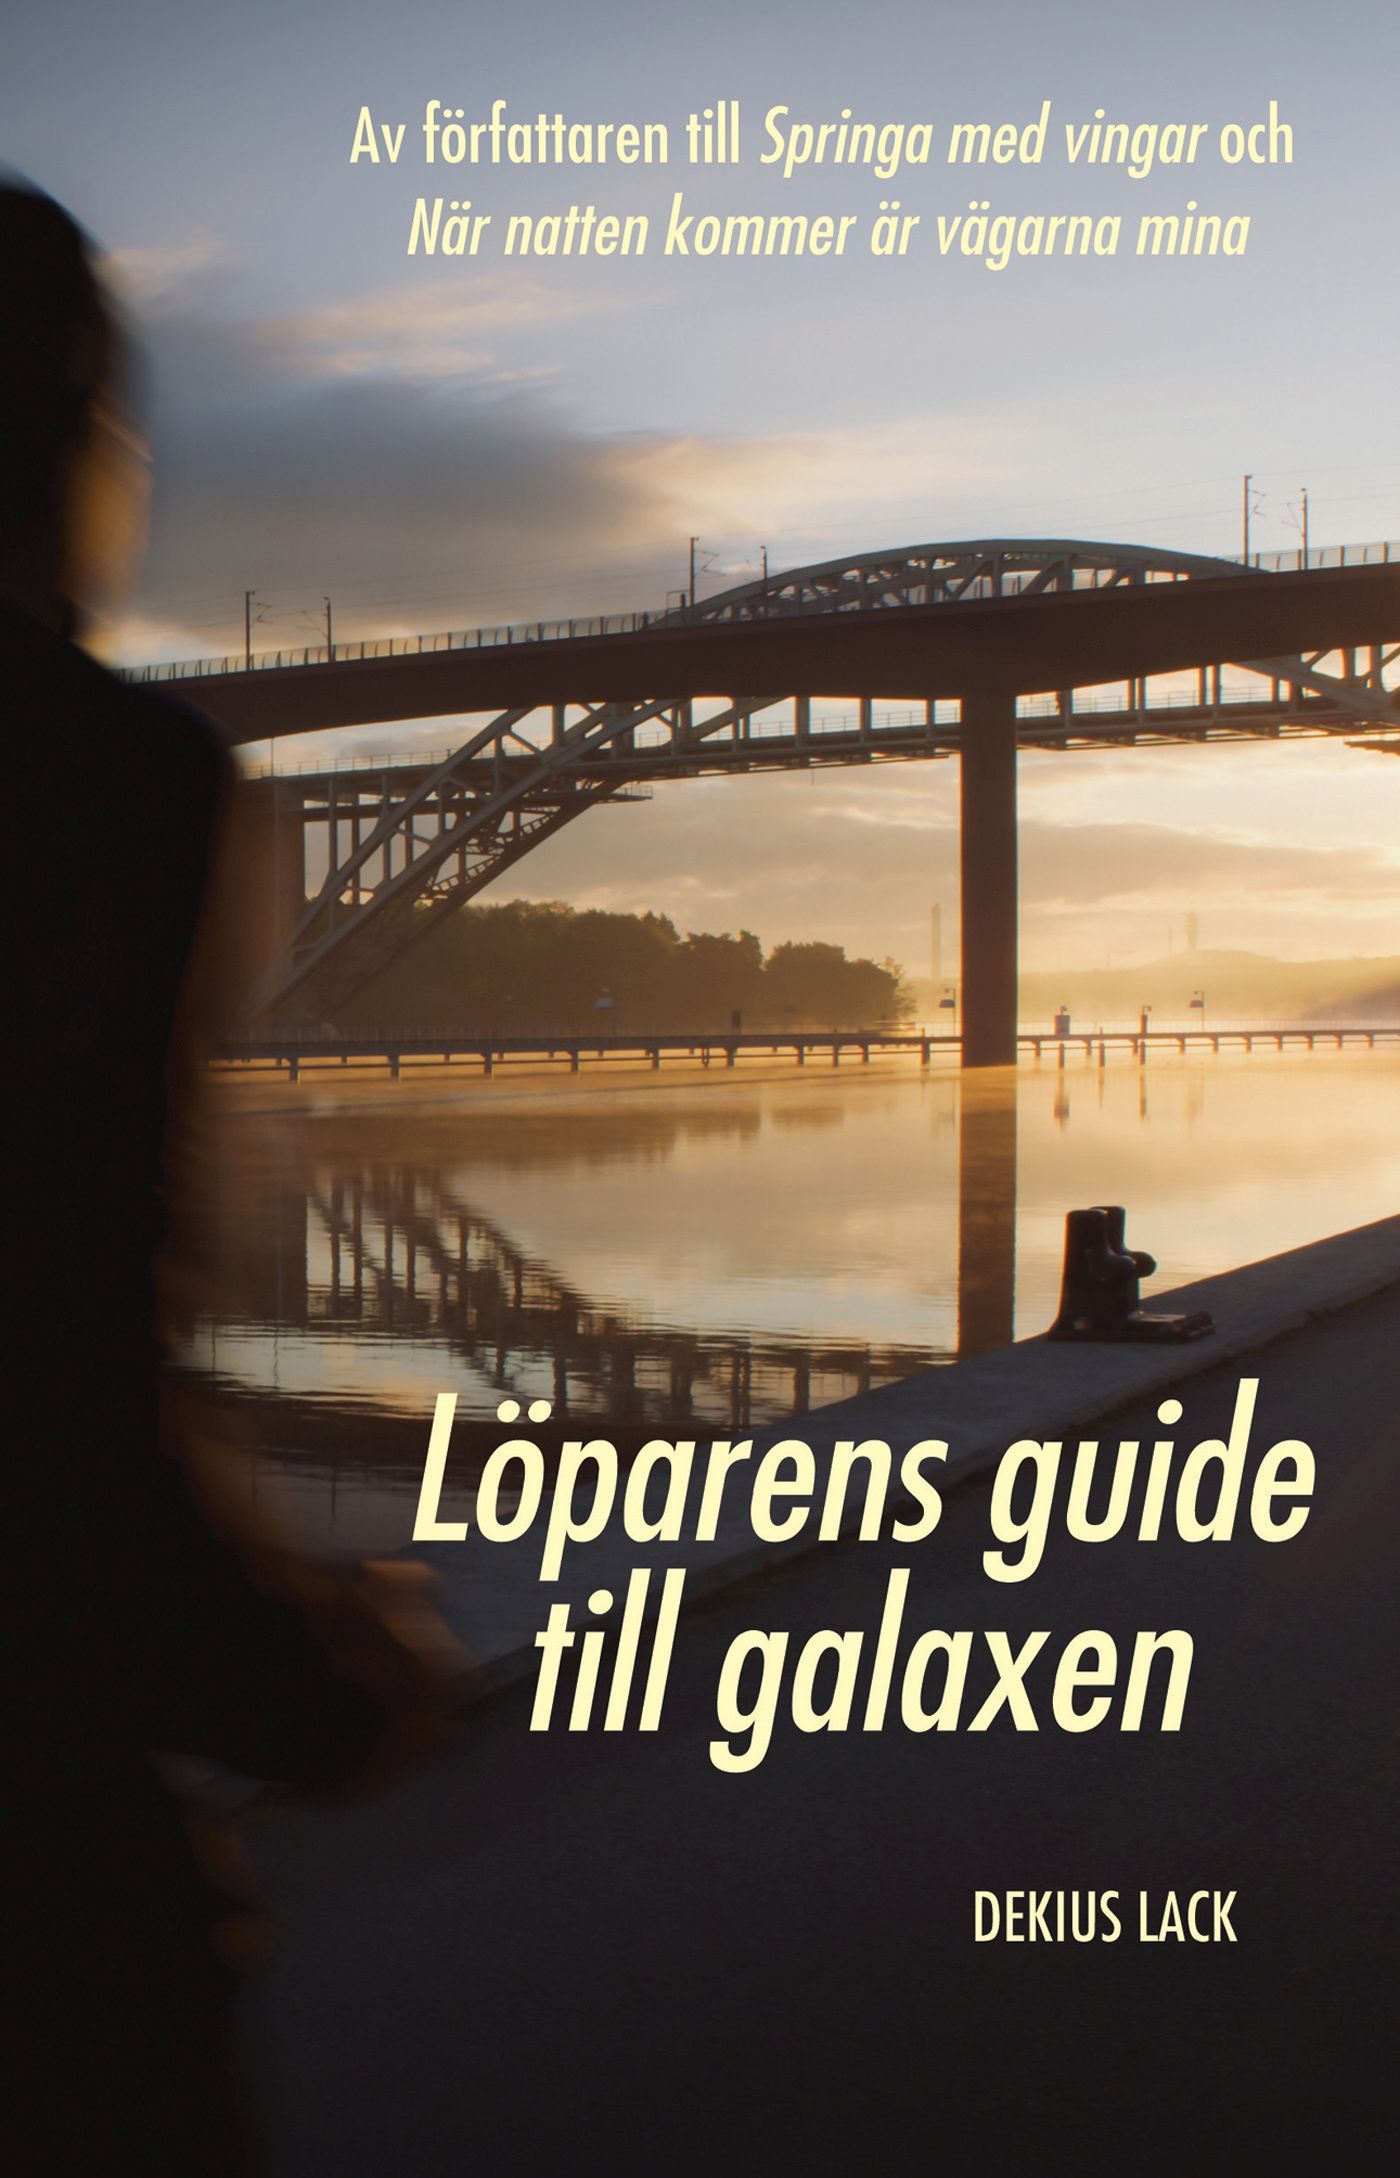 Löparens guide till galaxen, e-bok av Dekius Lack